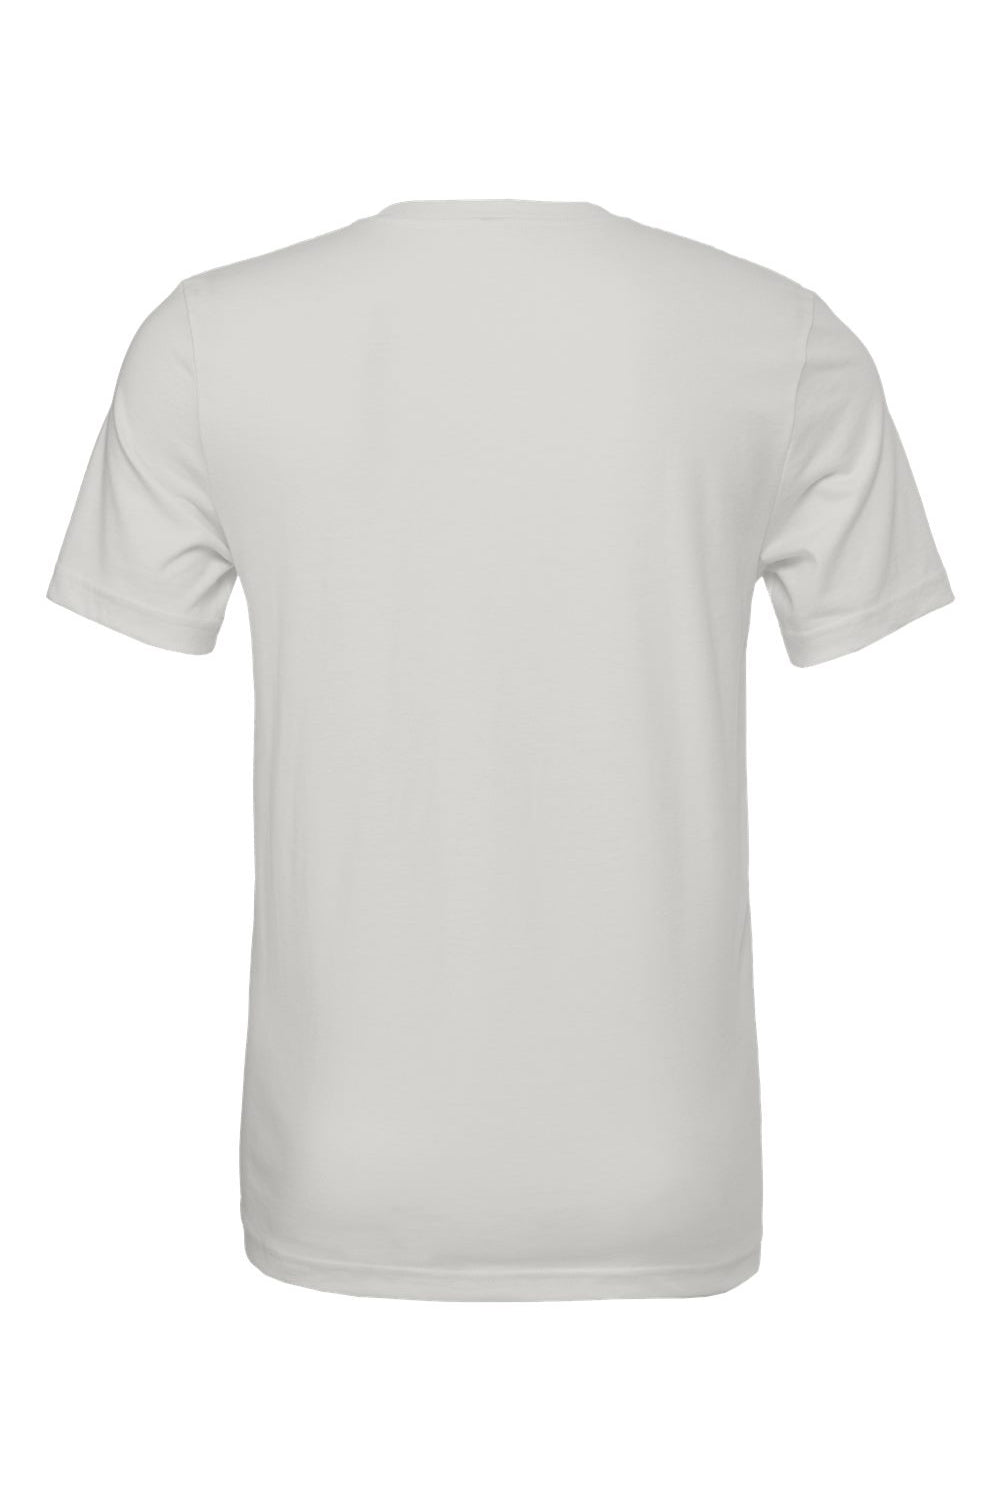 Bella + Canvas BC3001/3001C Mens Jersey Short Sleeve Crewneck T-Shirt Silver Grey Flat Back